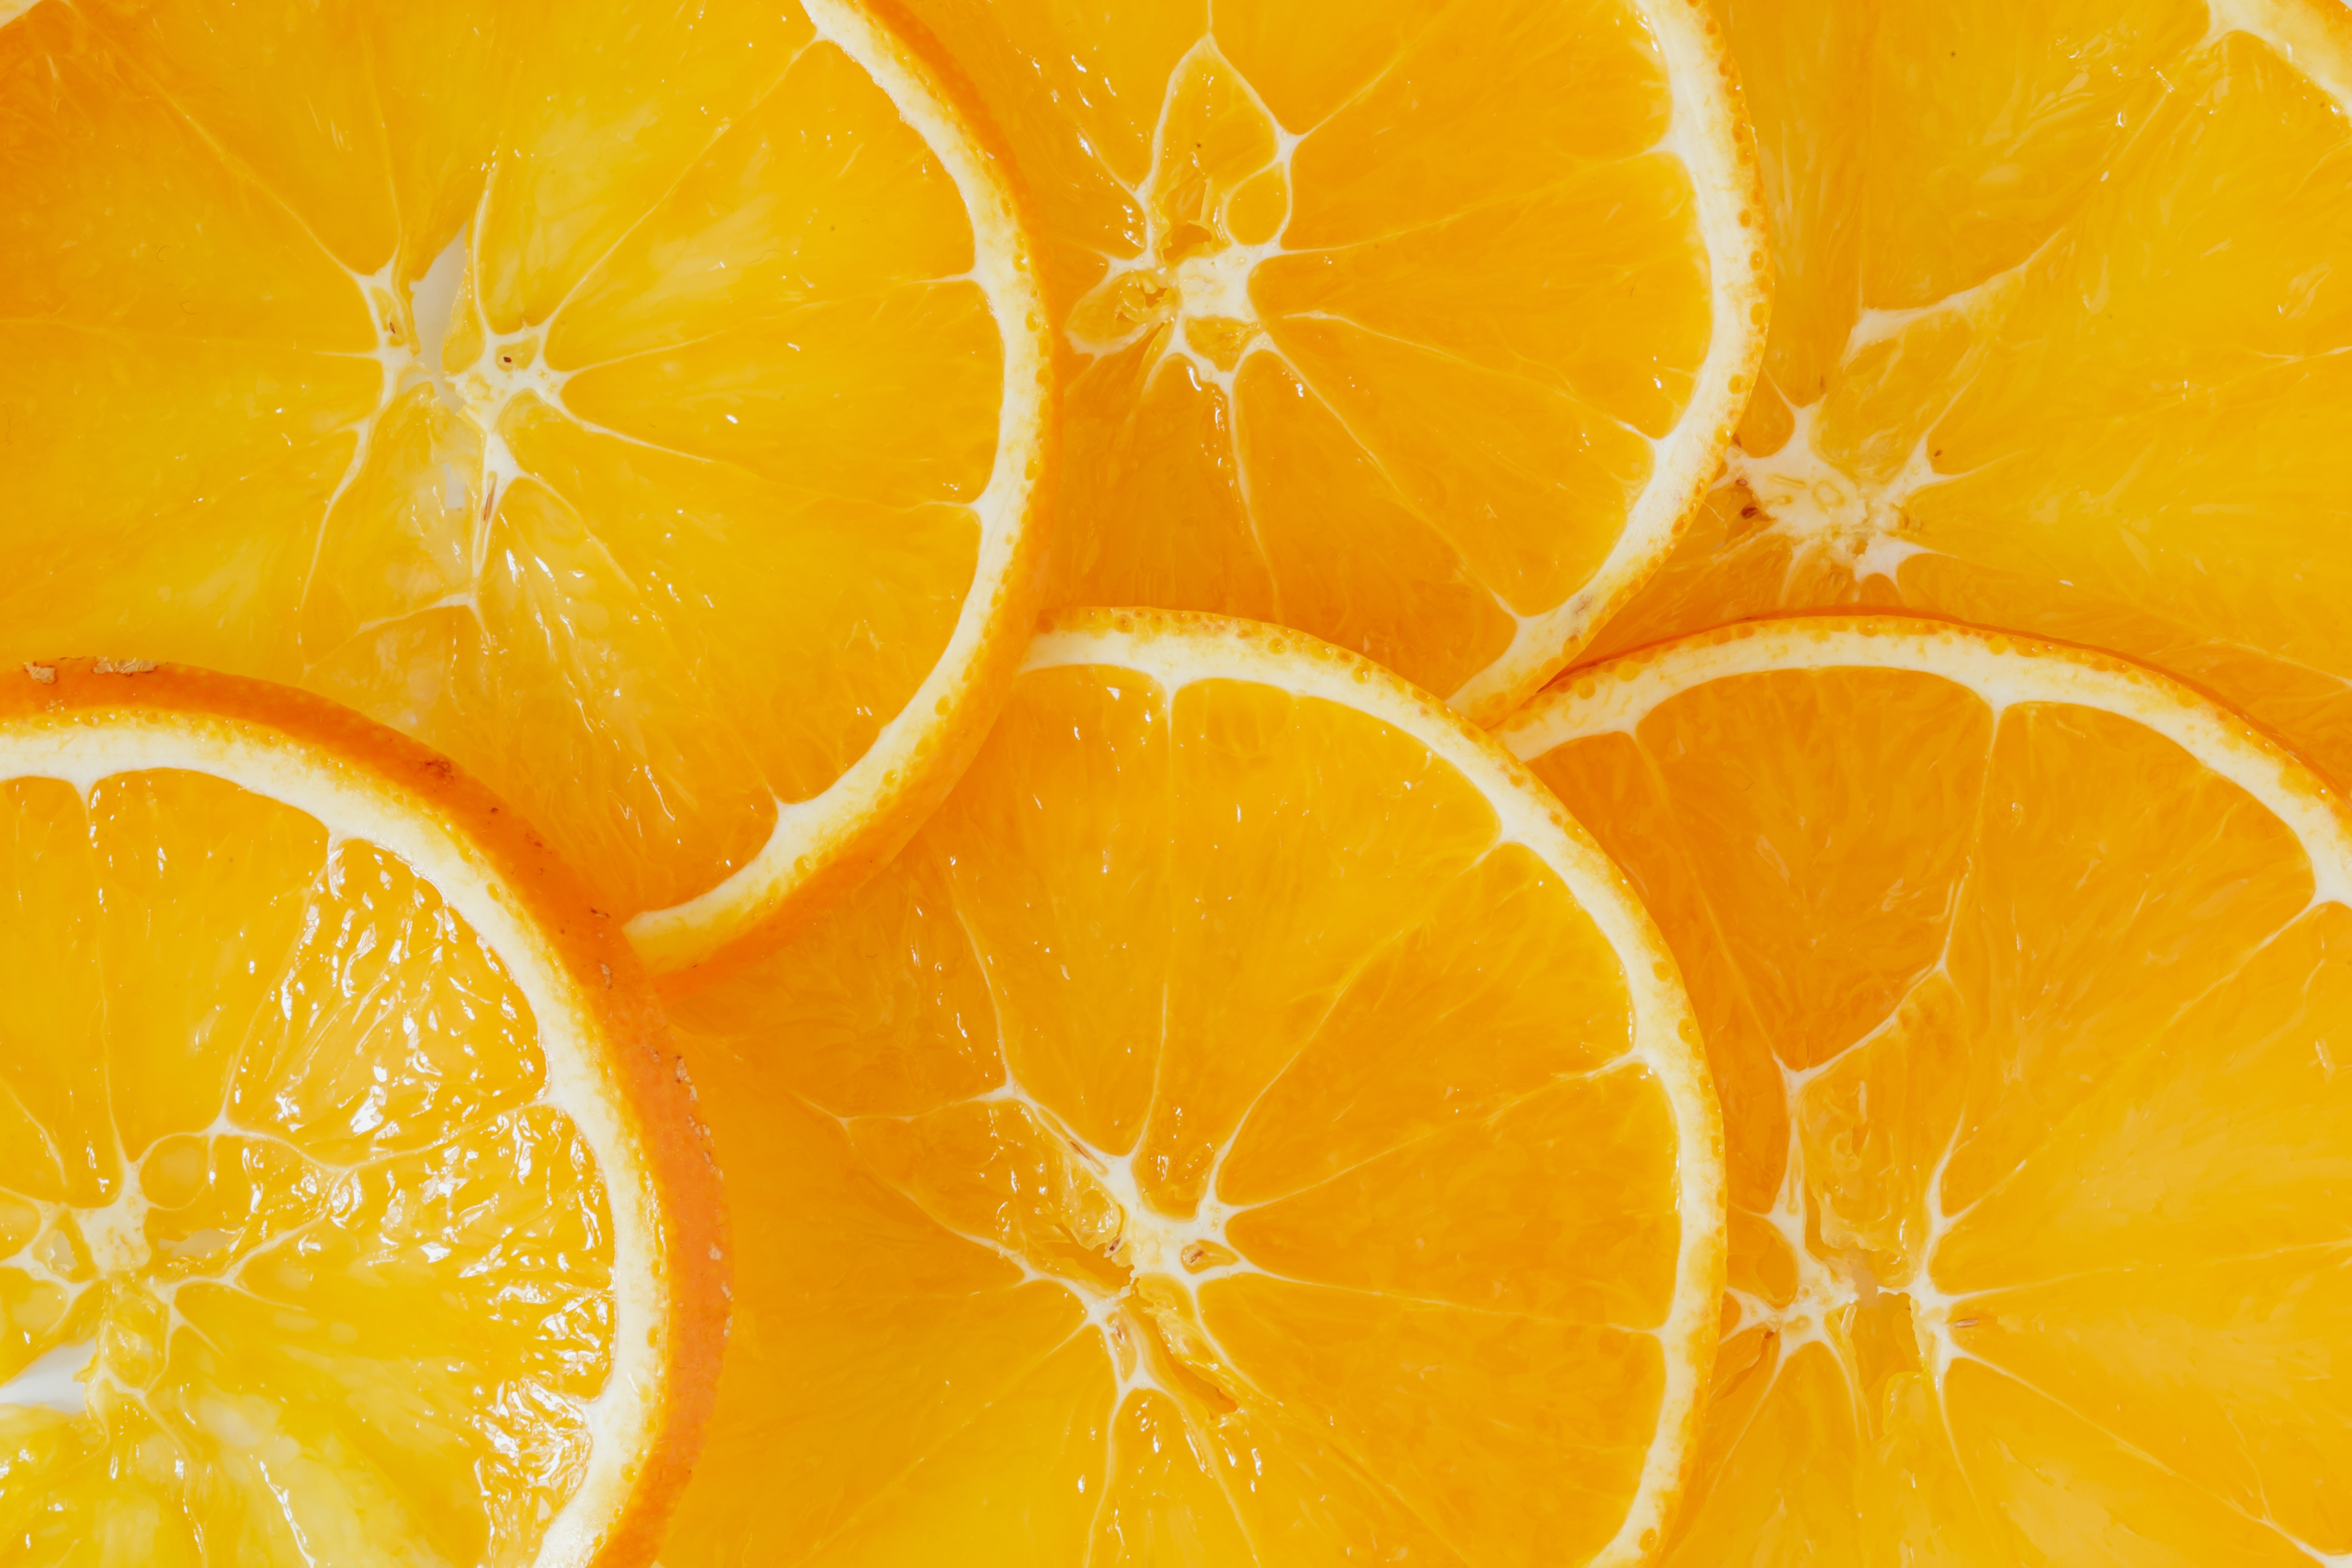 consume orange juice, high fiber fruits